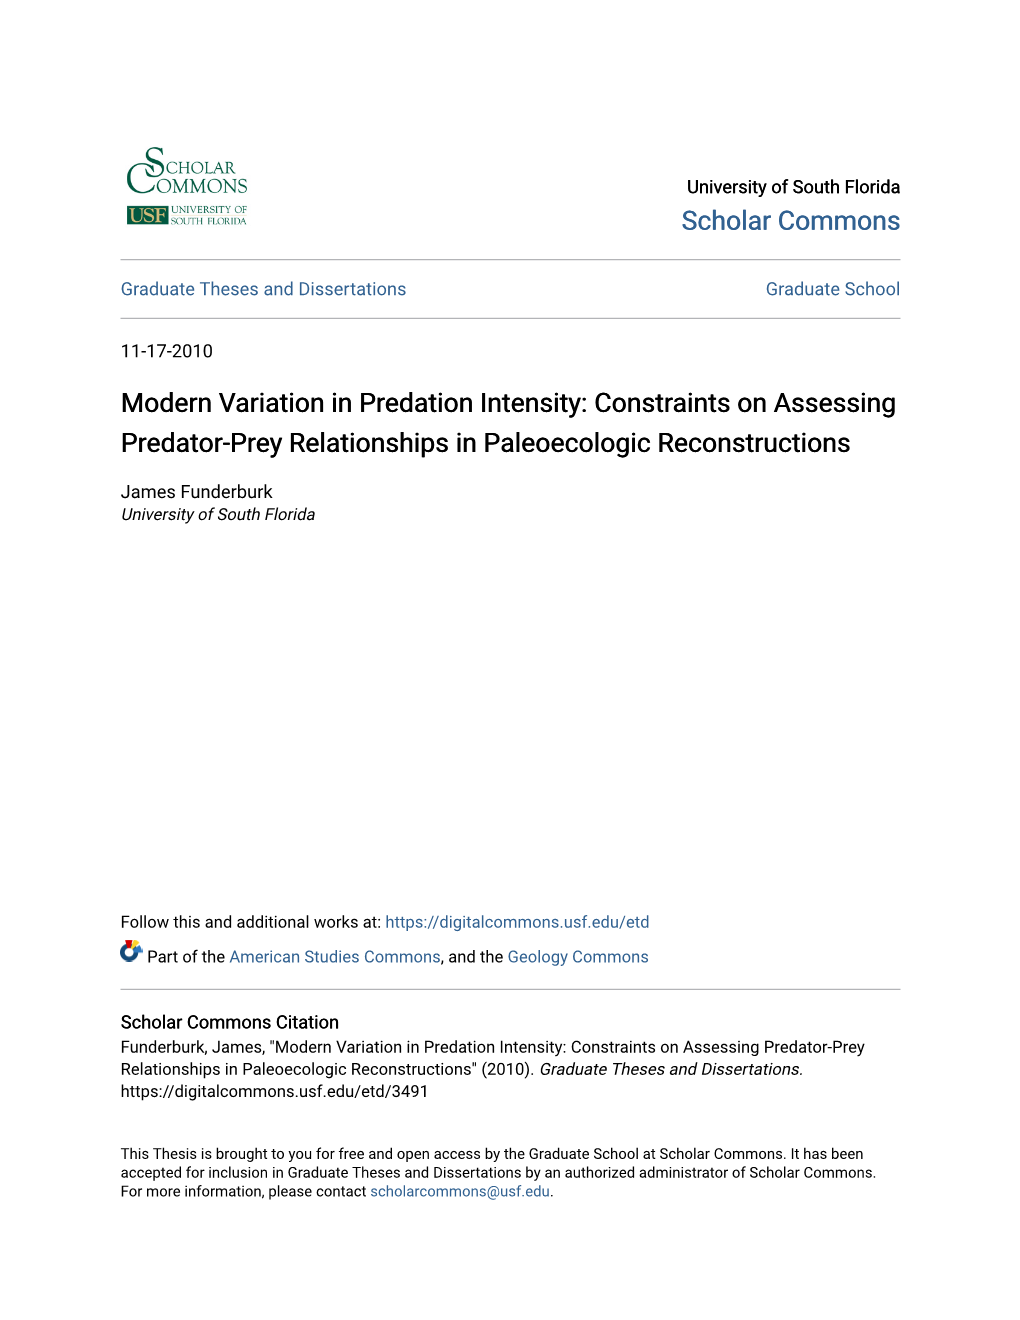 Constraints on Assessing Predator-Prey Relationships in Paleoecologic Reconstructions